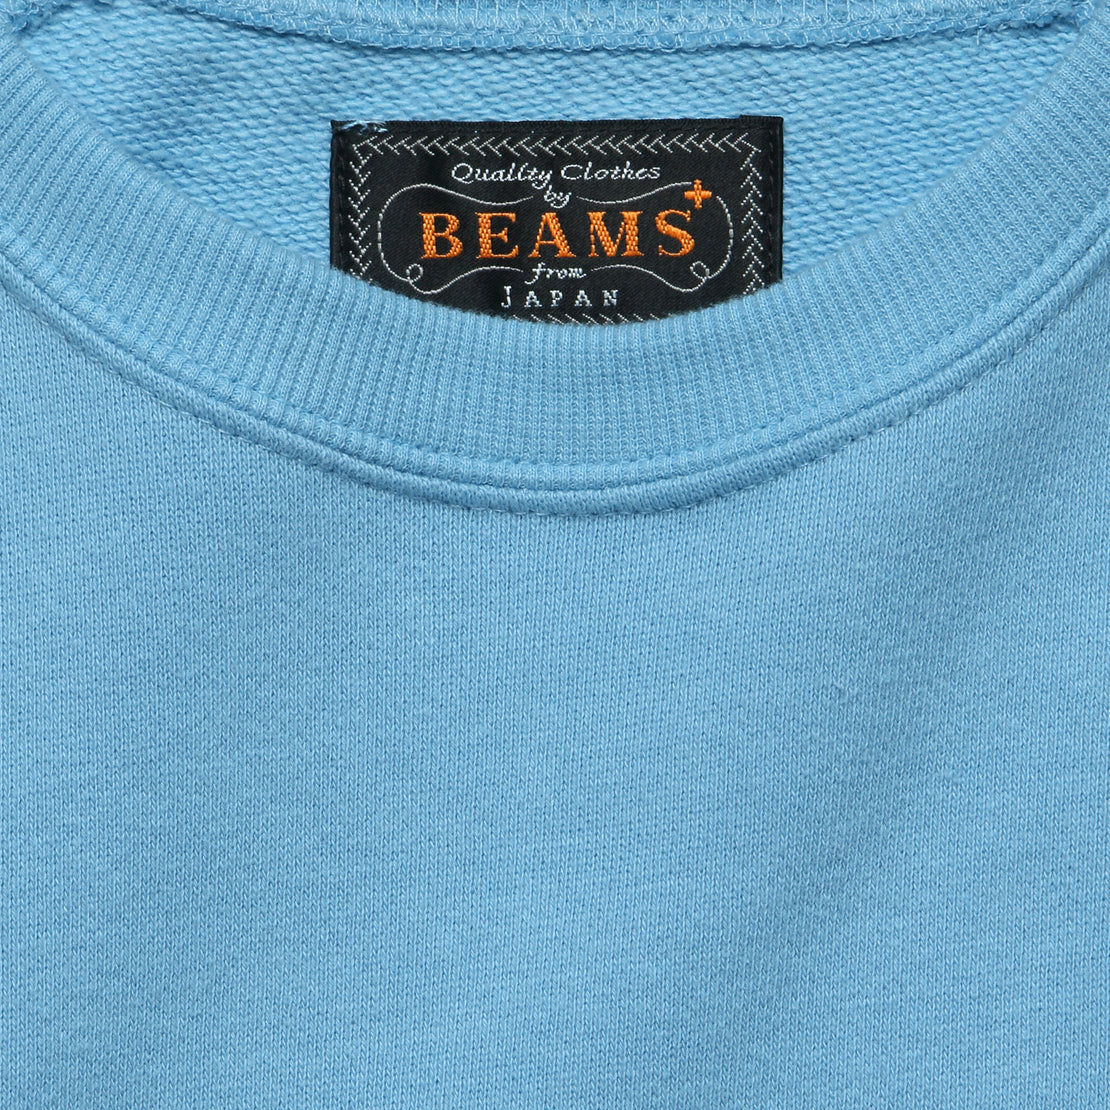 Cut-Off Sweatshirt - Sax - BEAMS+ - STAG Provisions - Tops - Fleece / Sweatshirt